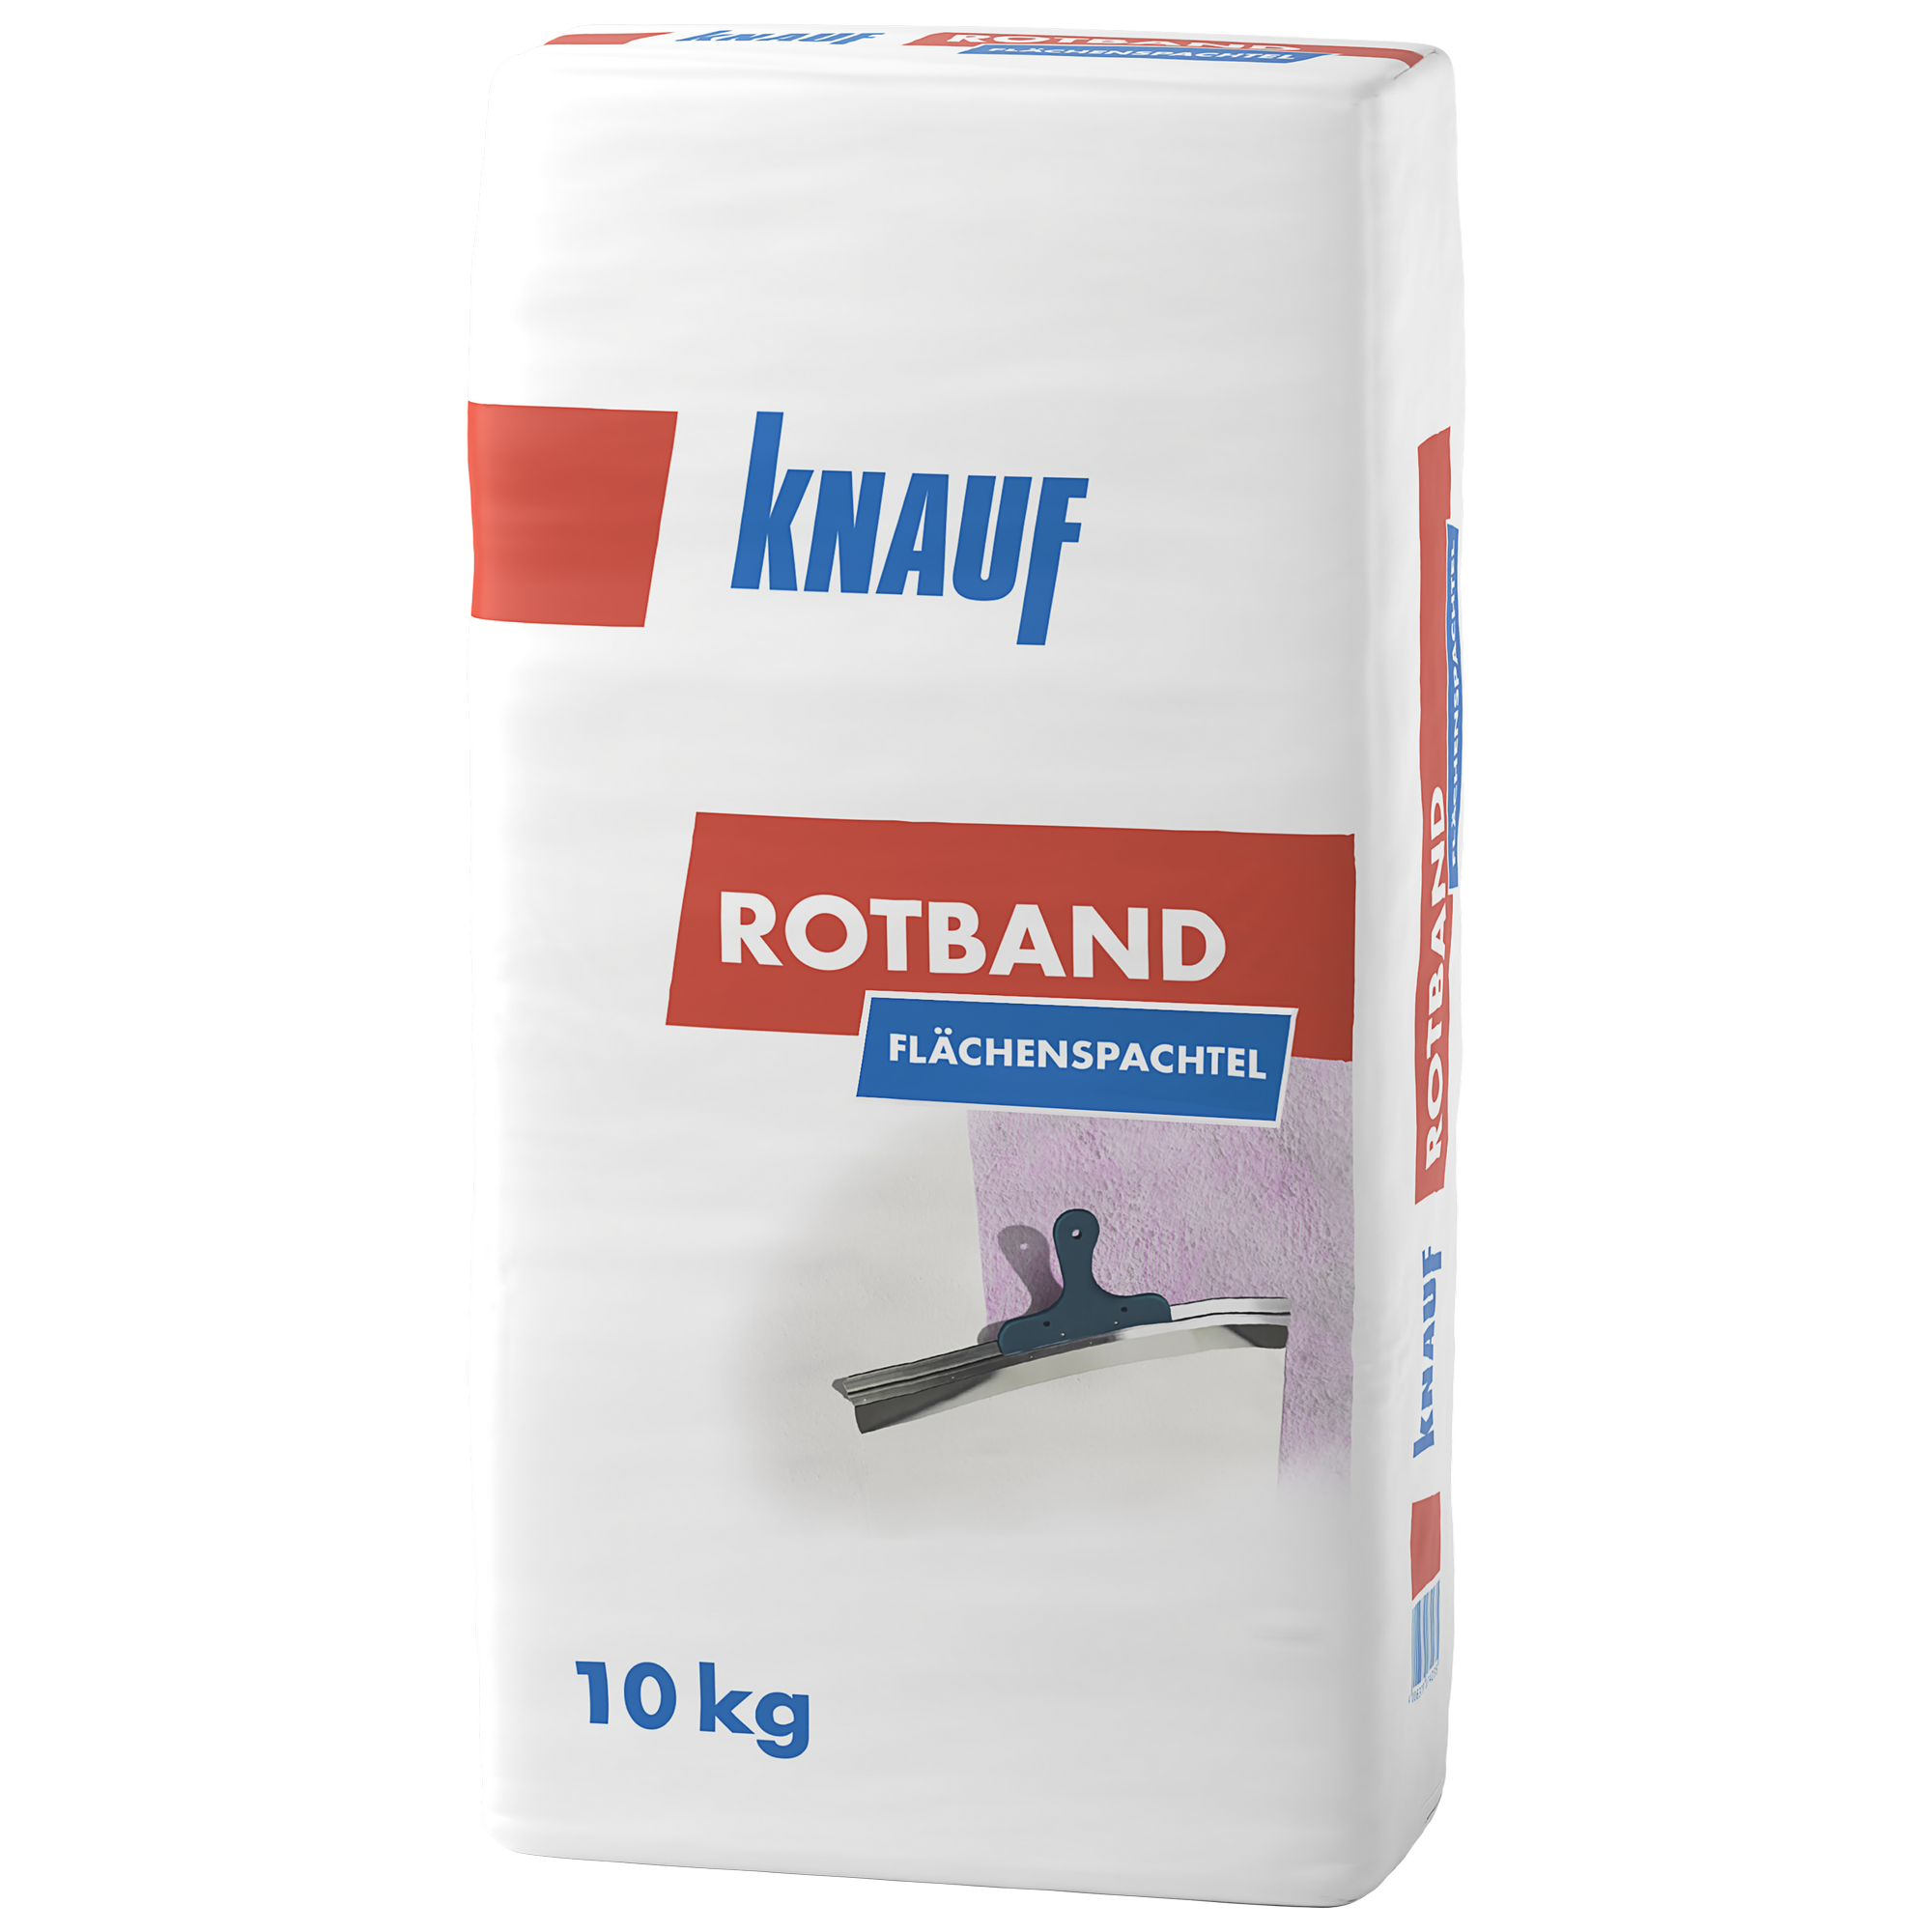 Flächenspachtel 'Rotband' 10 kg + product picture